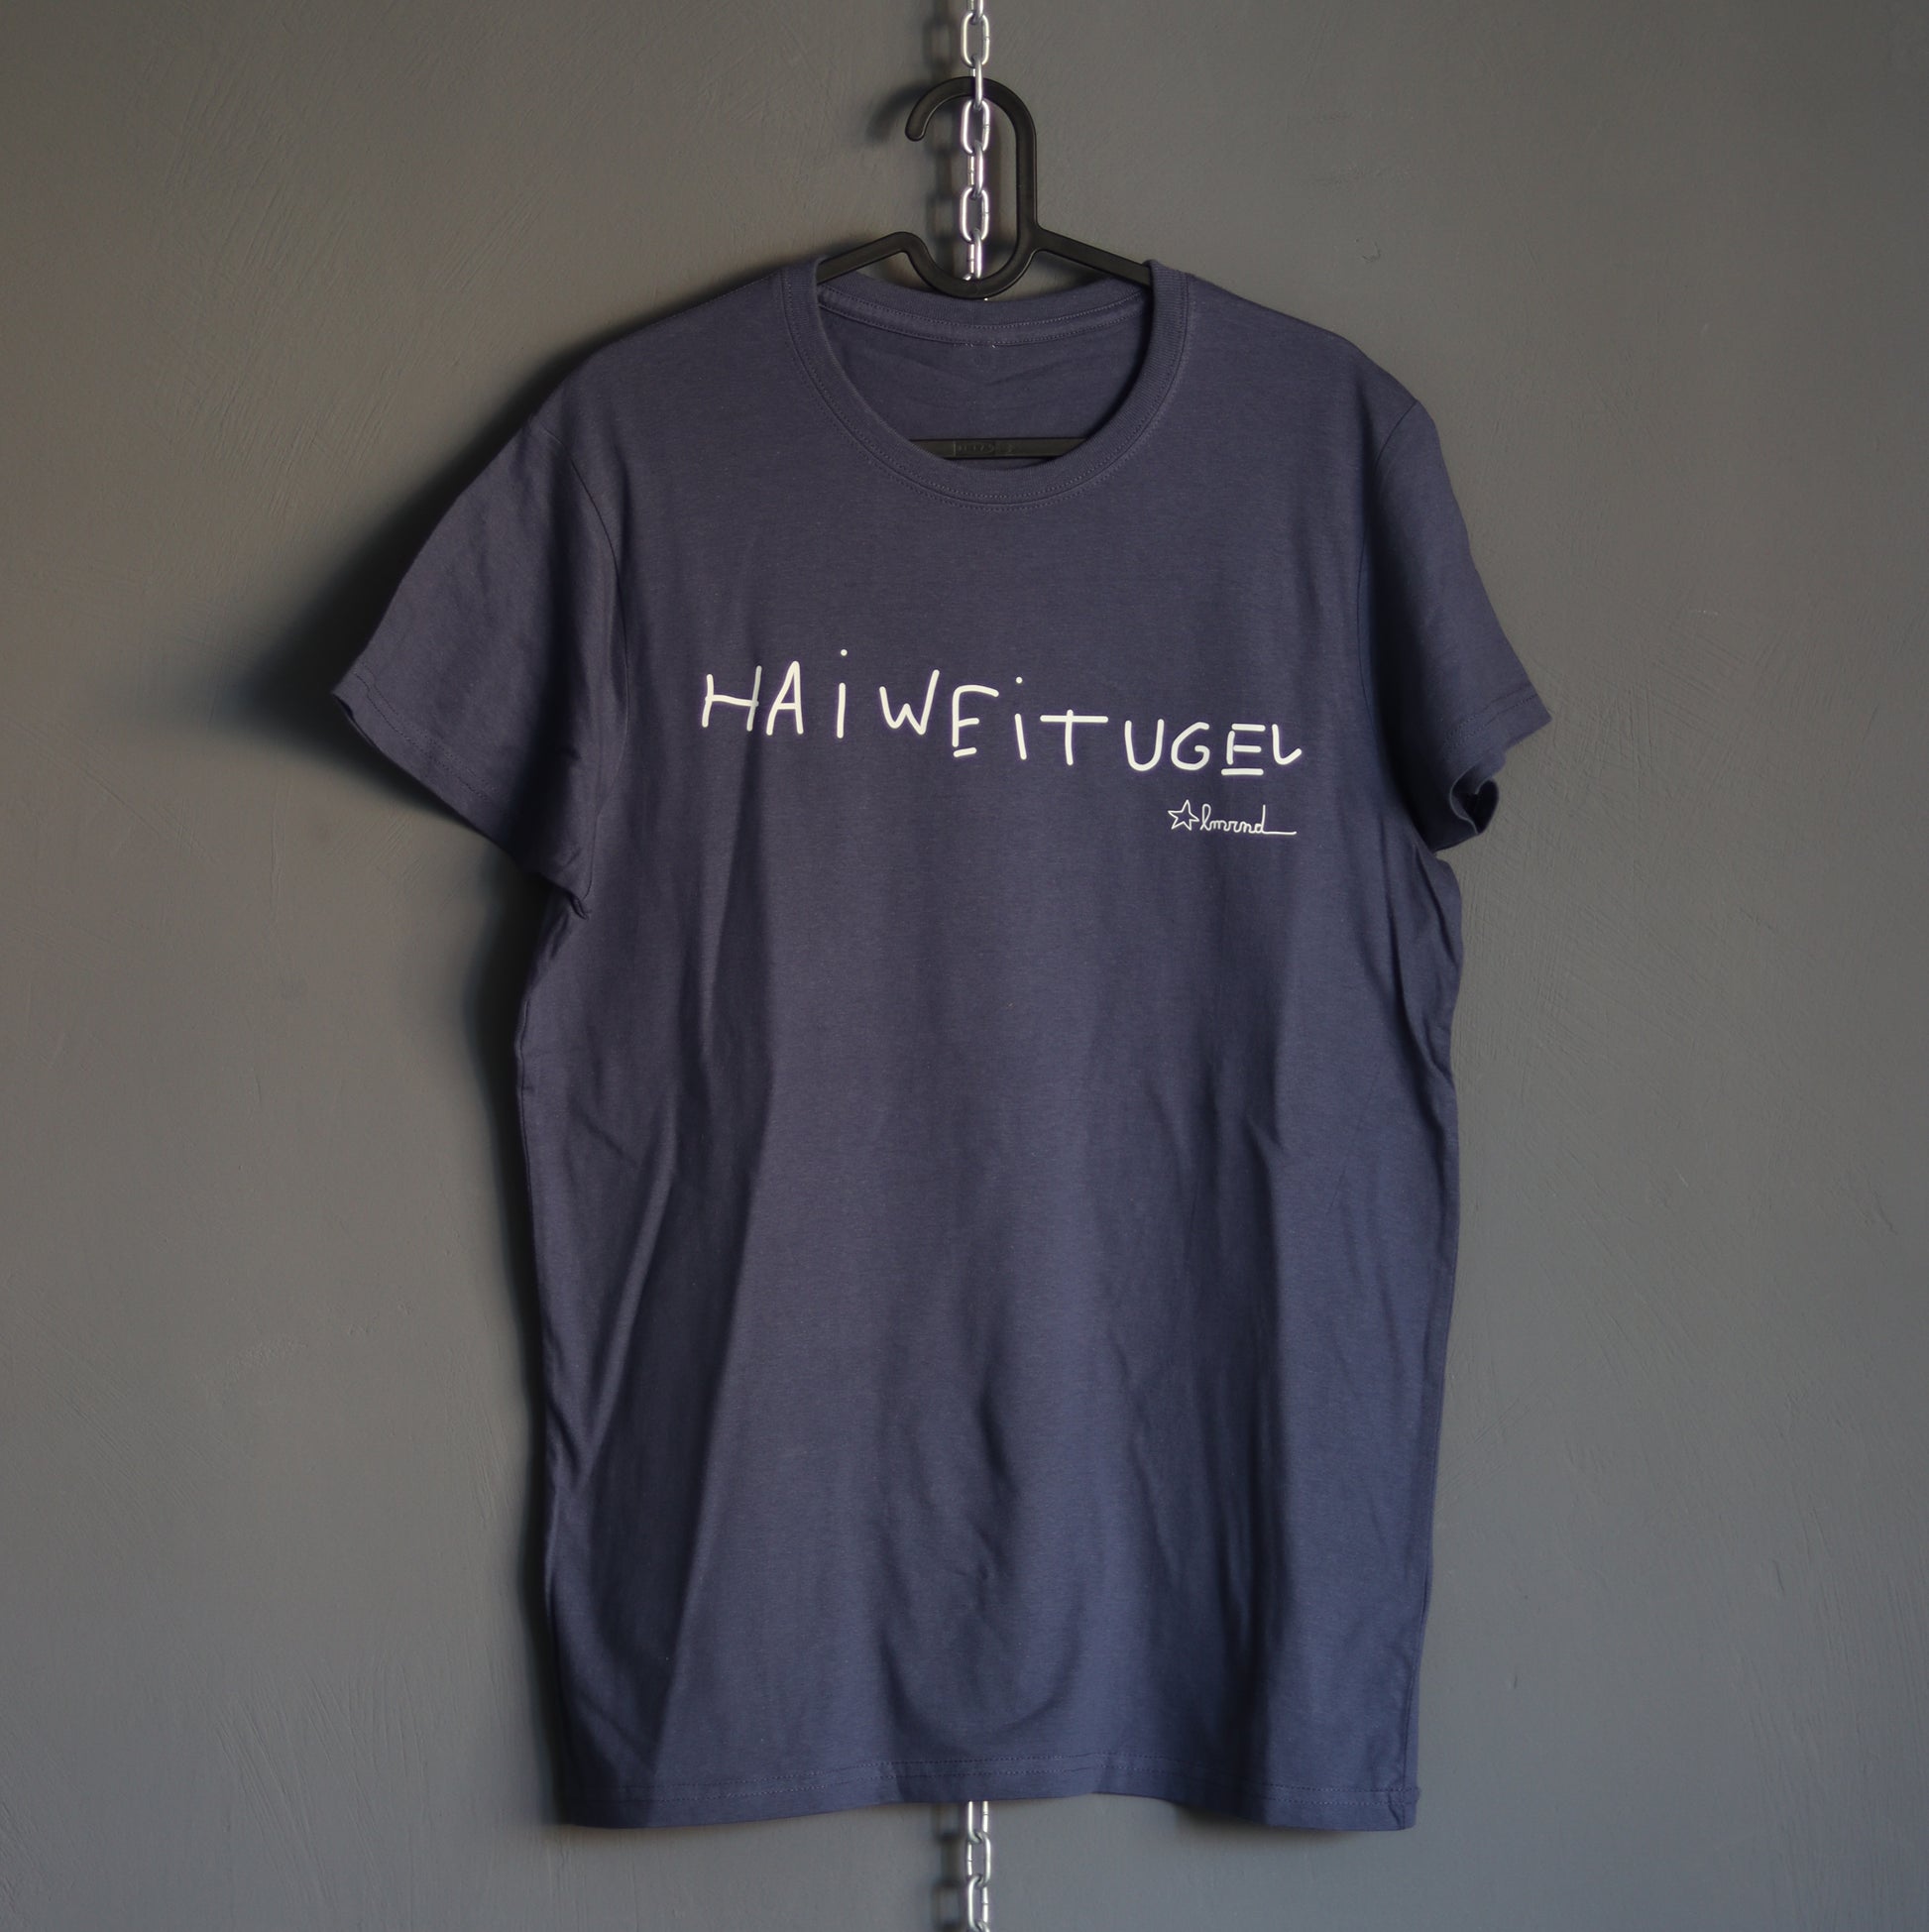 Camisetas Haiweitugel. Camisetas Rock Online.